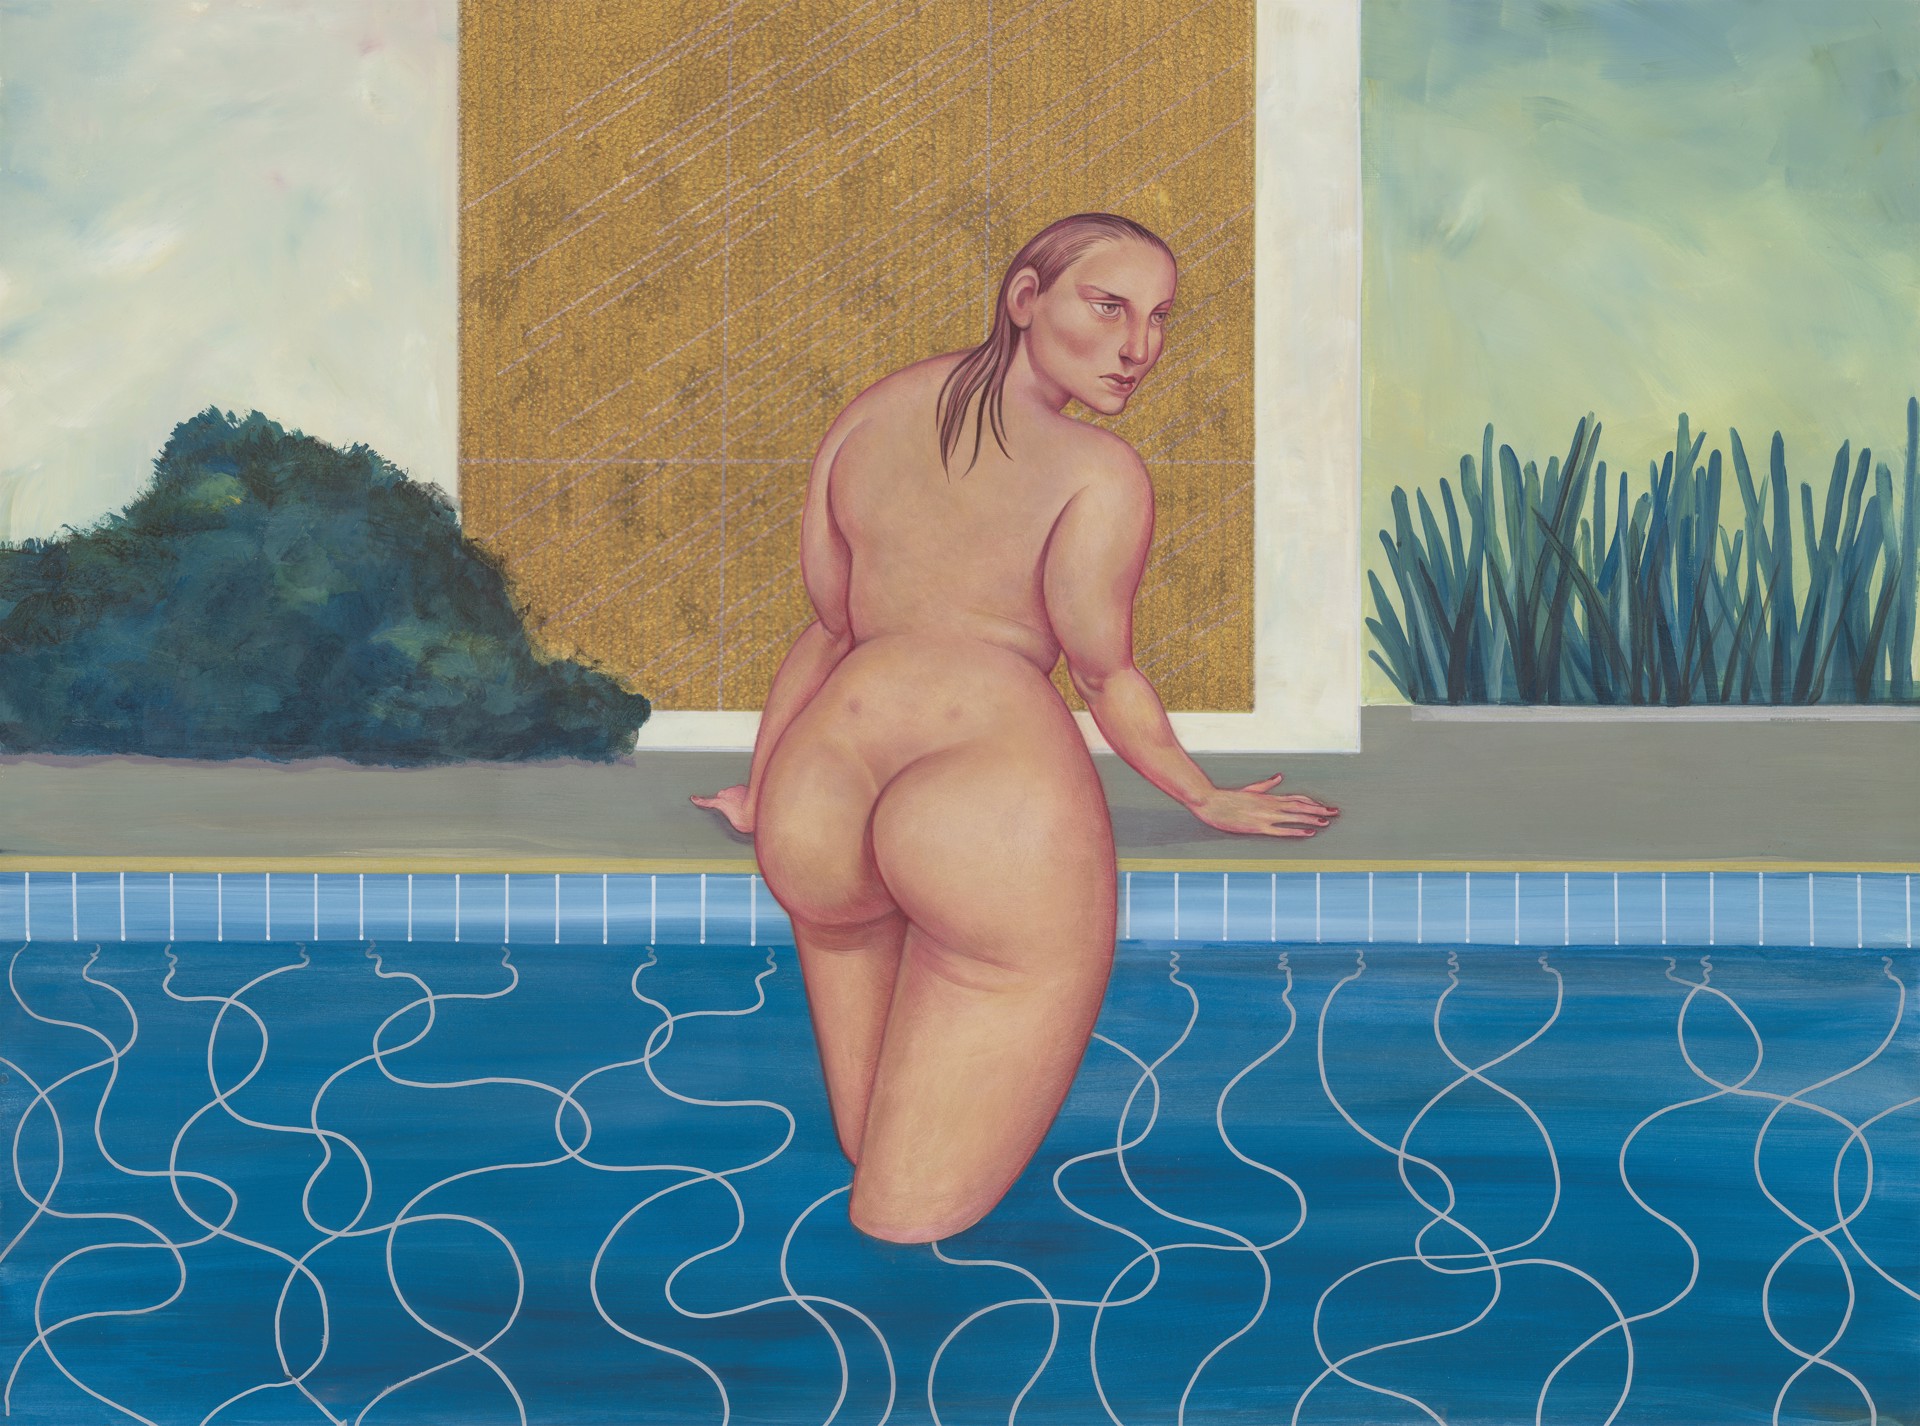 Davinia Hockney, The Woman in the Pool by Anita Kunz